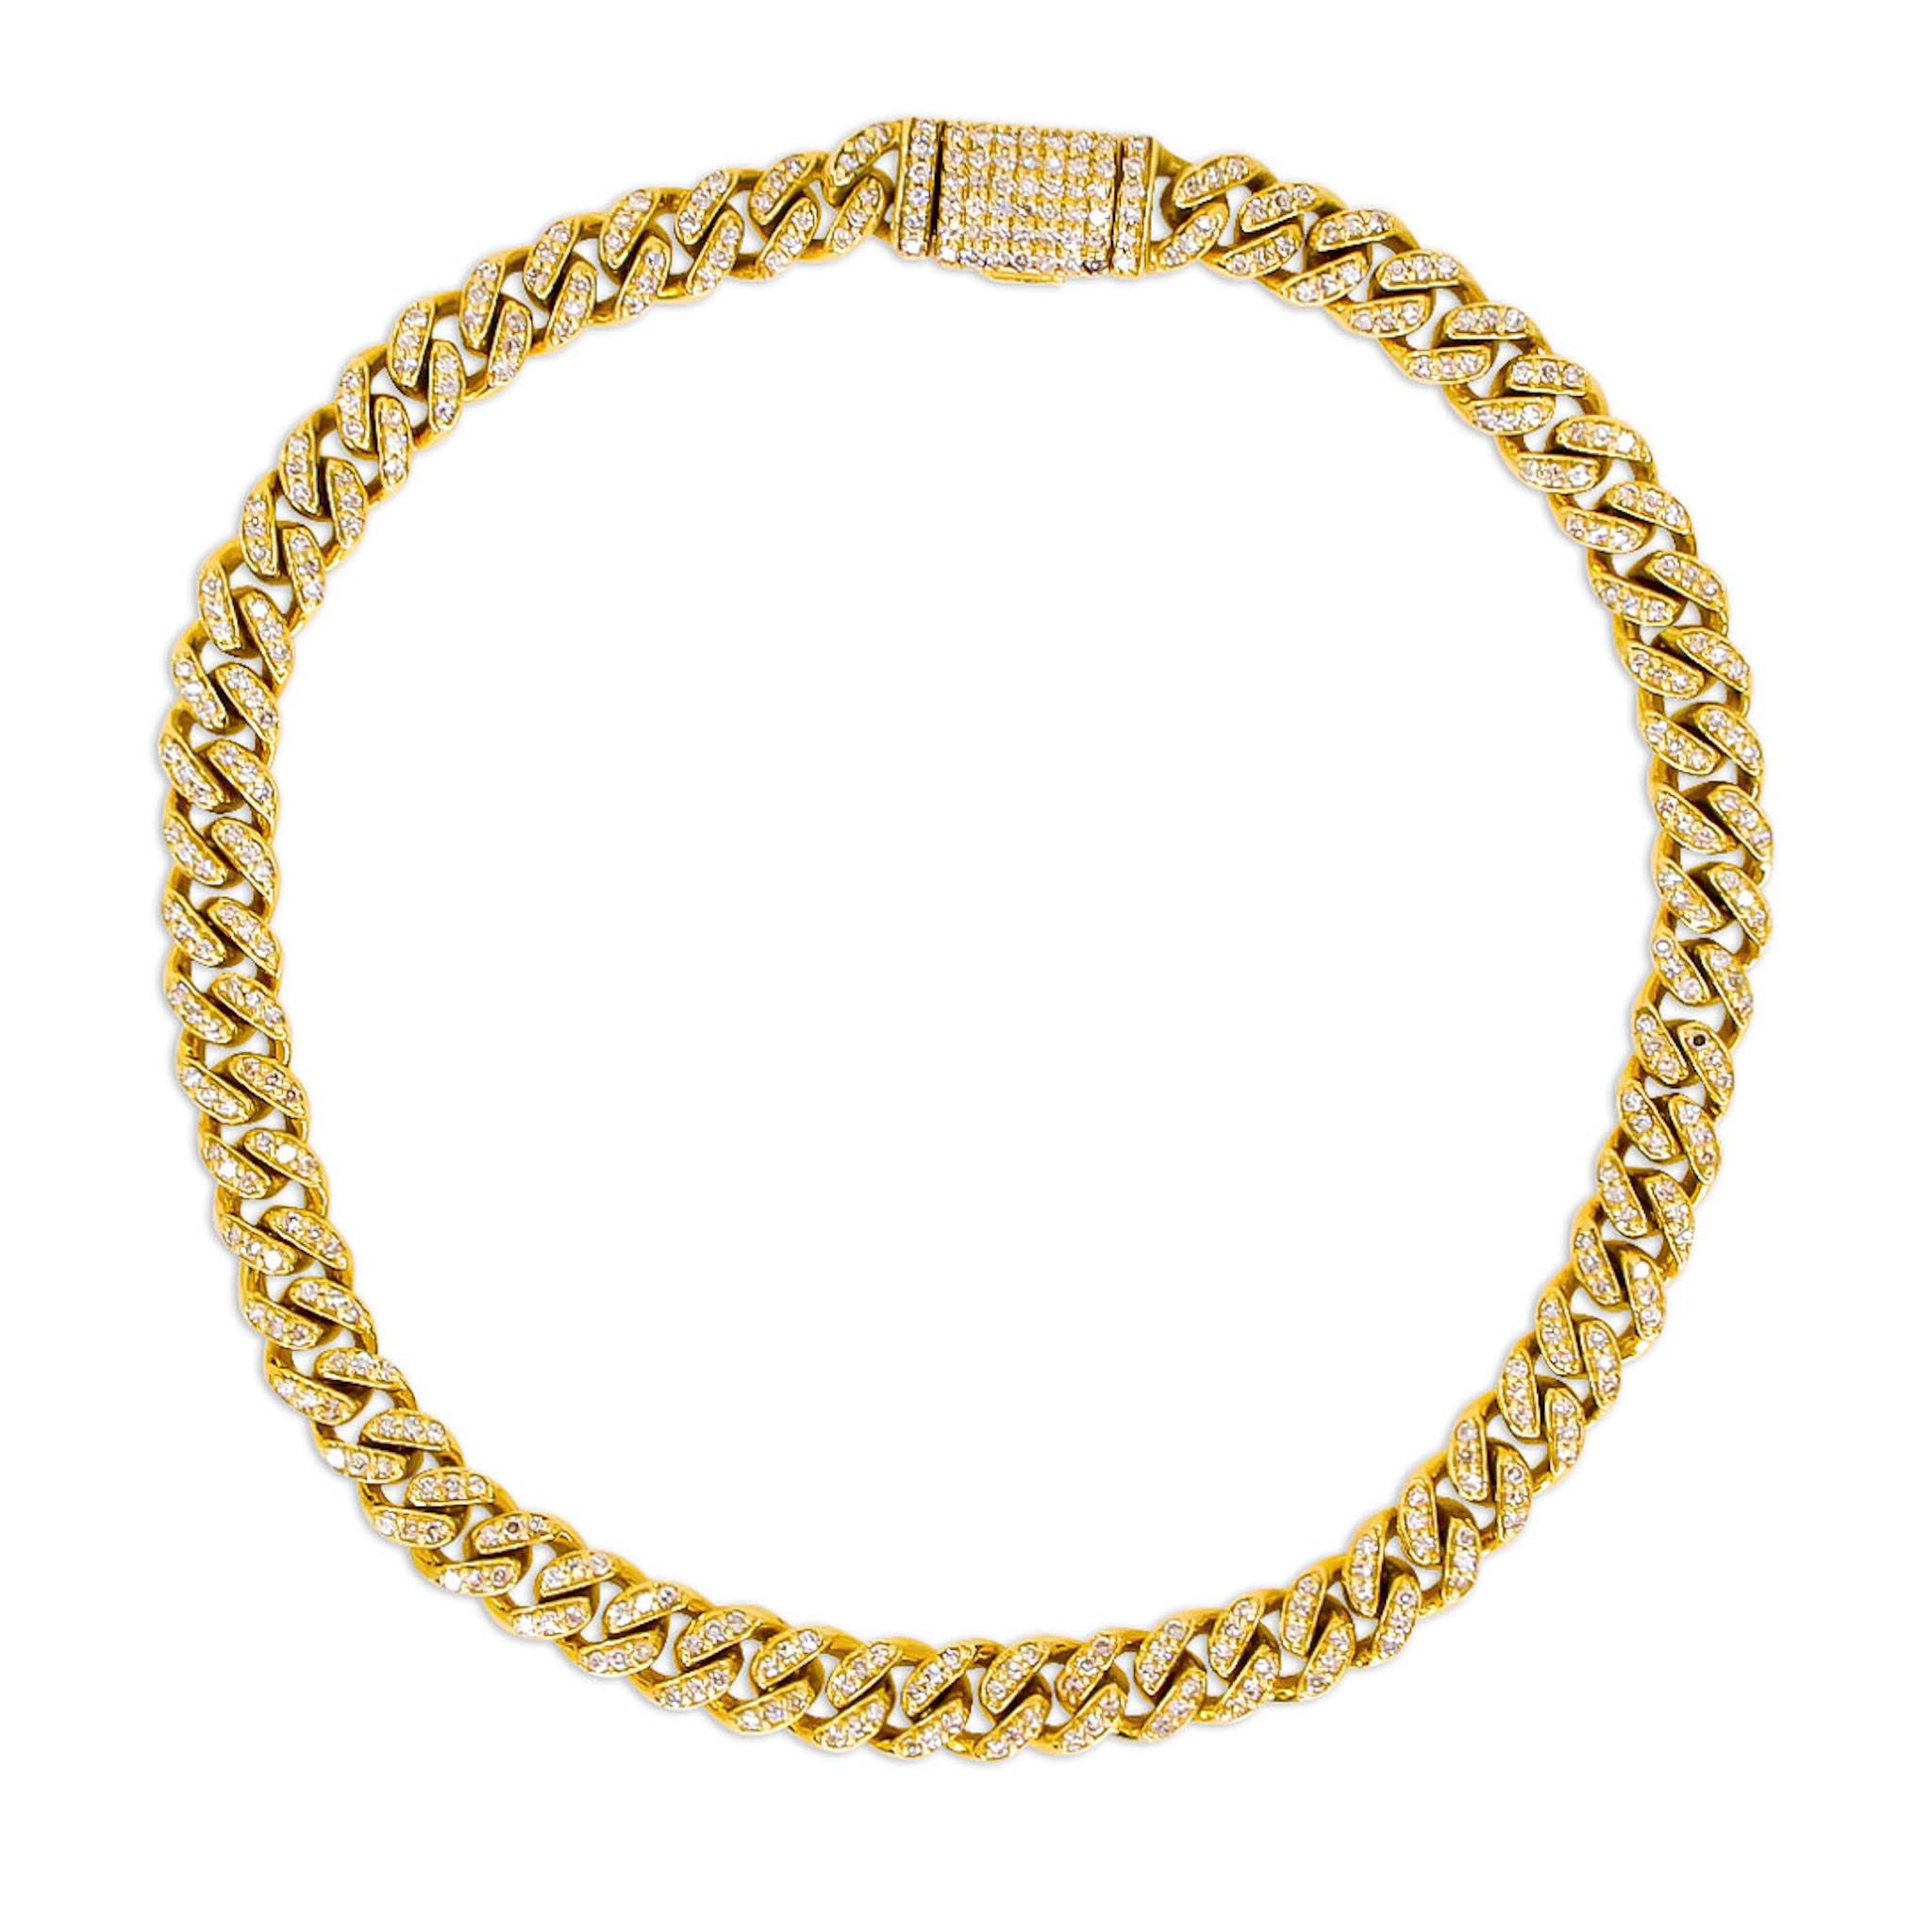 Small Gold Cuban Link Diamond Bracelet - 14kt Gold - Monisha Melwani Jewelry